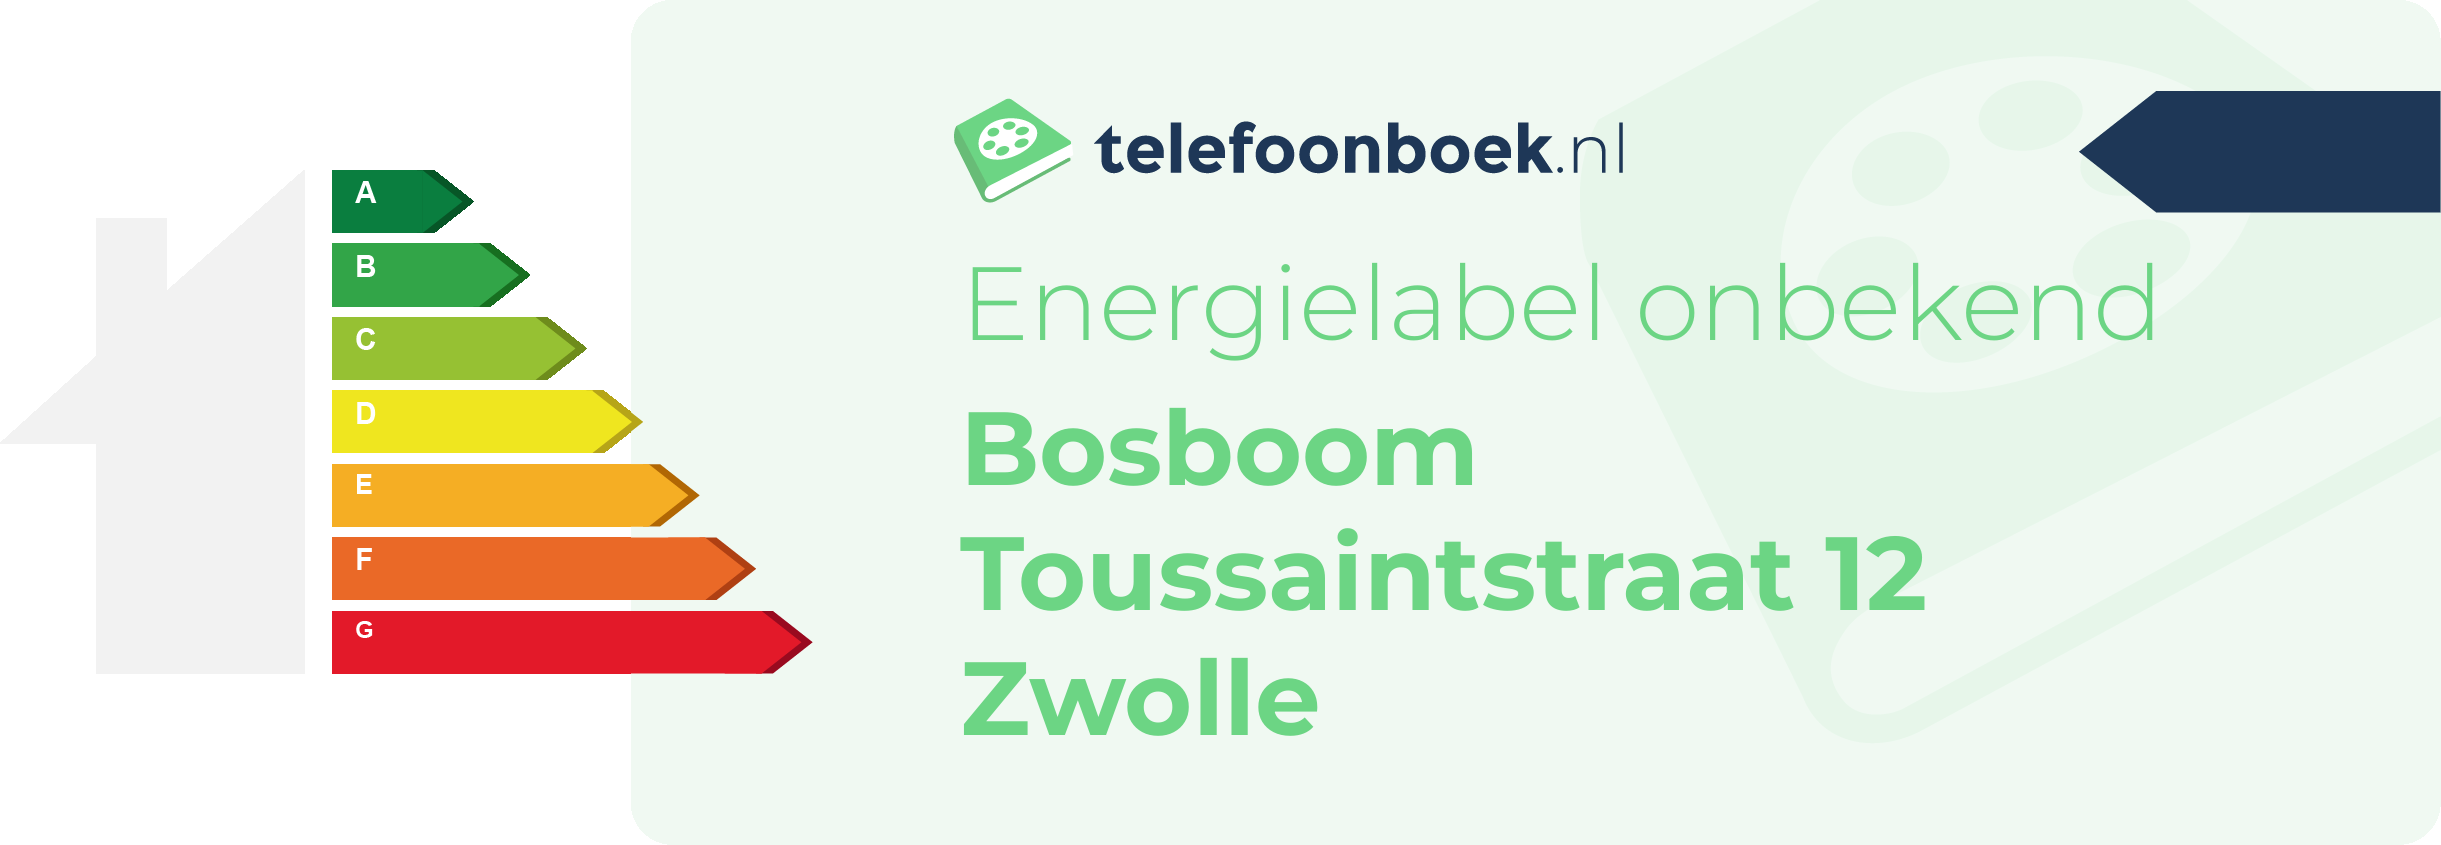 Energielabel Bosboom Toussaintstraat 12 Zwolle